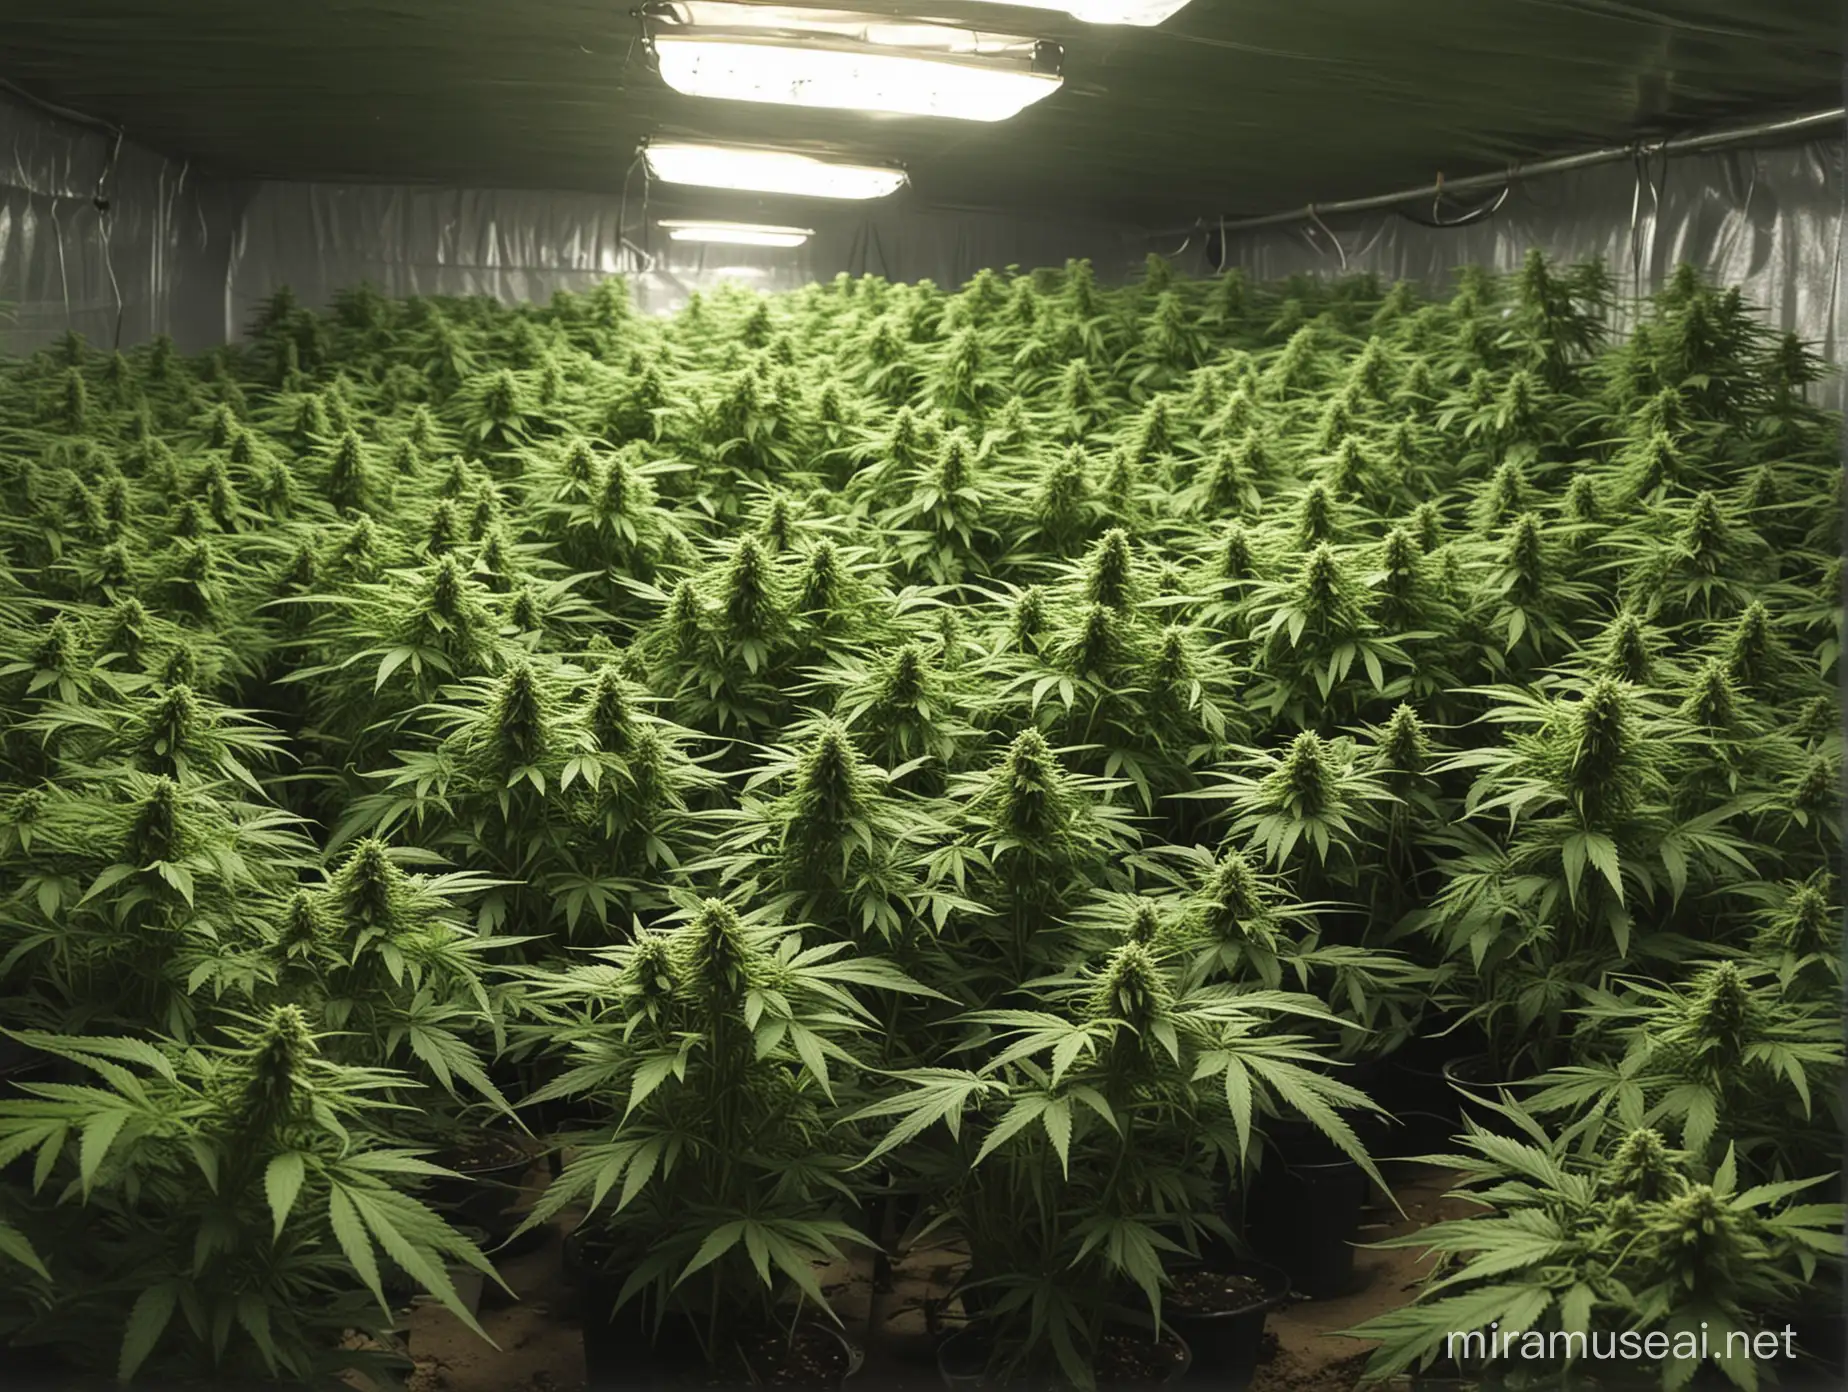 grow marijuana

